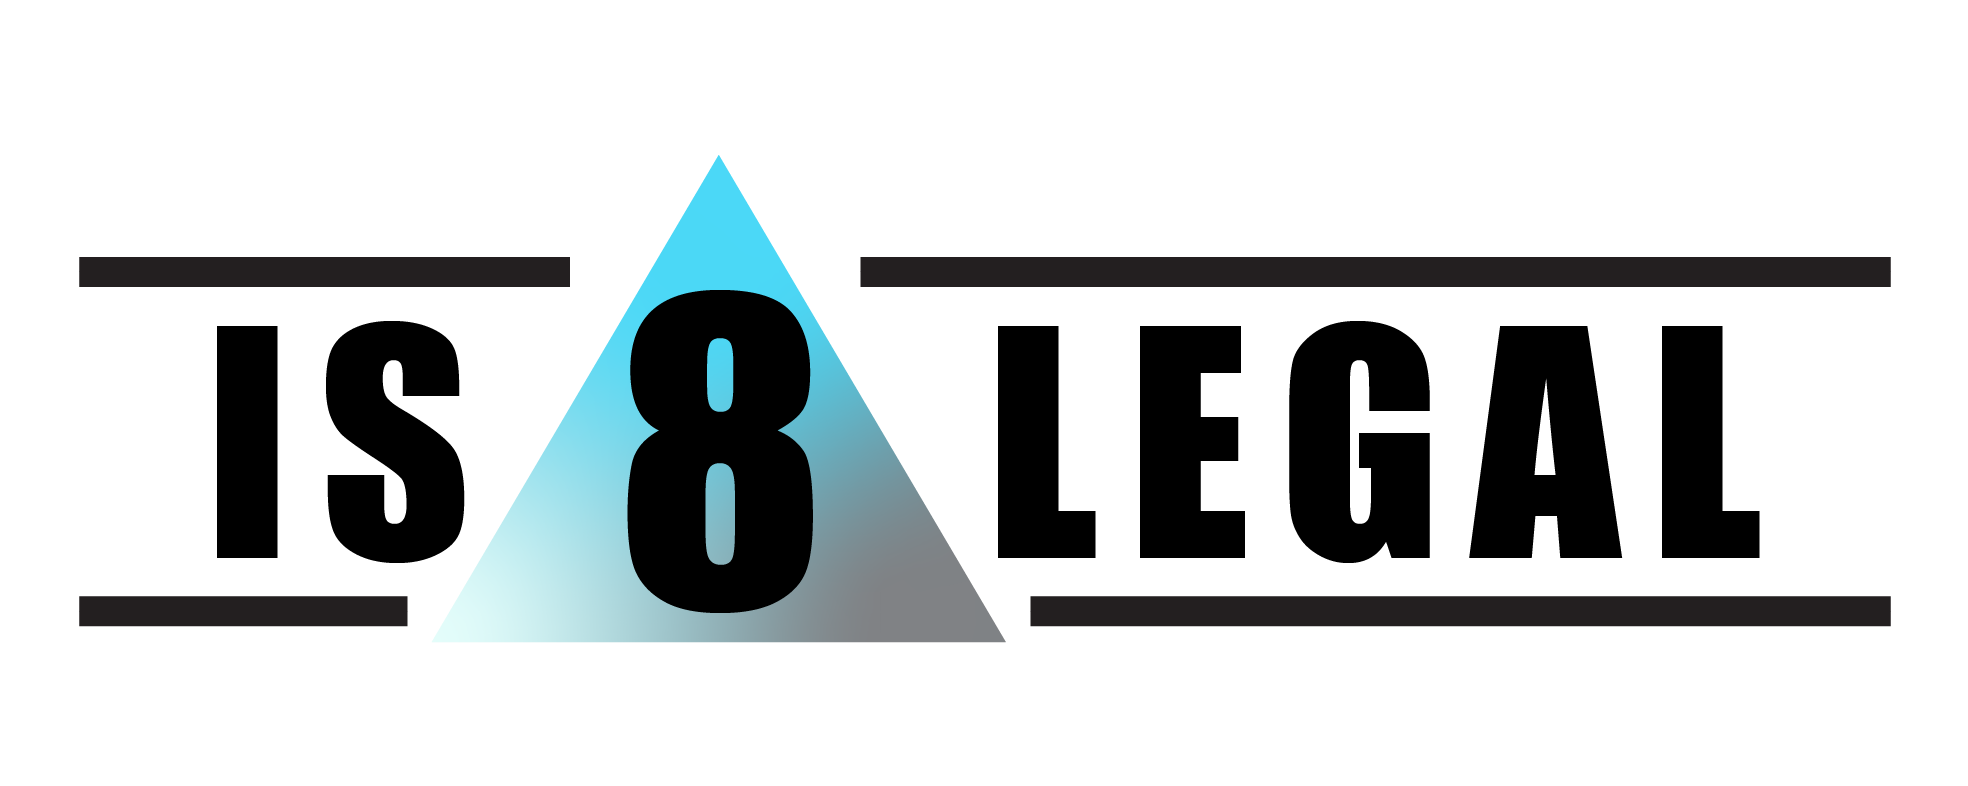 Is delta 8 legal logo